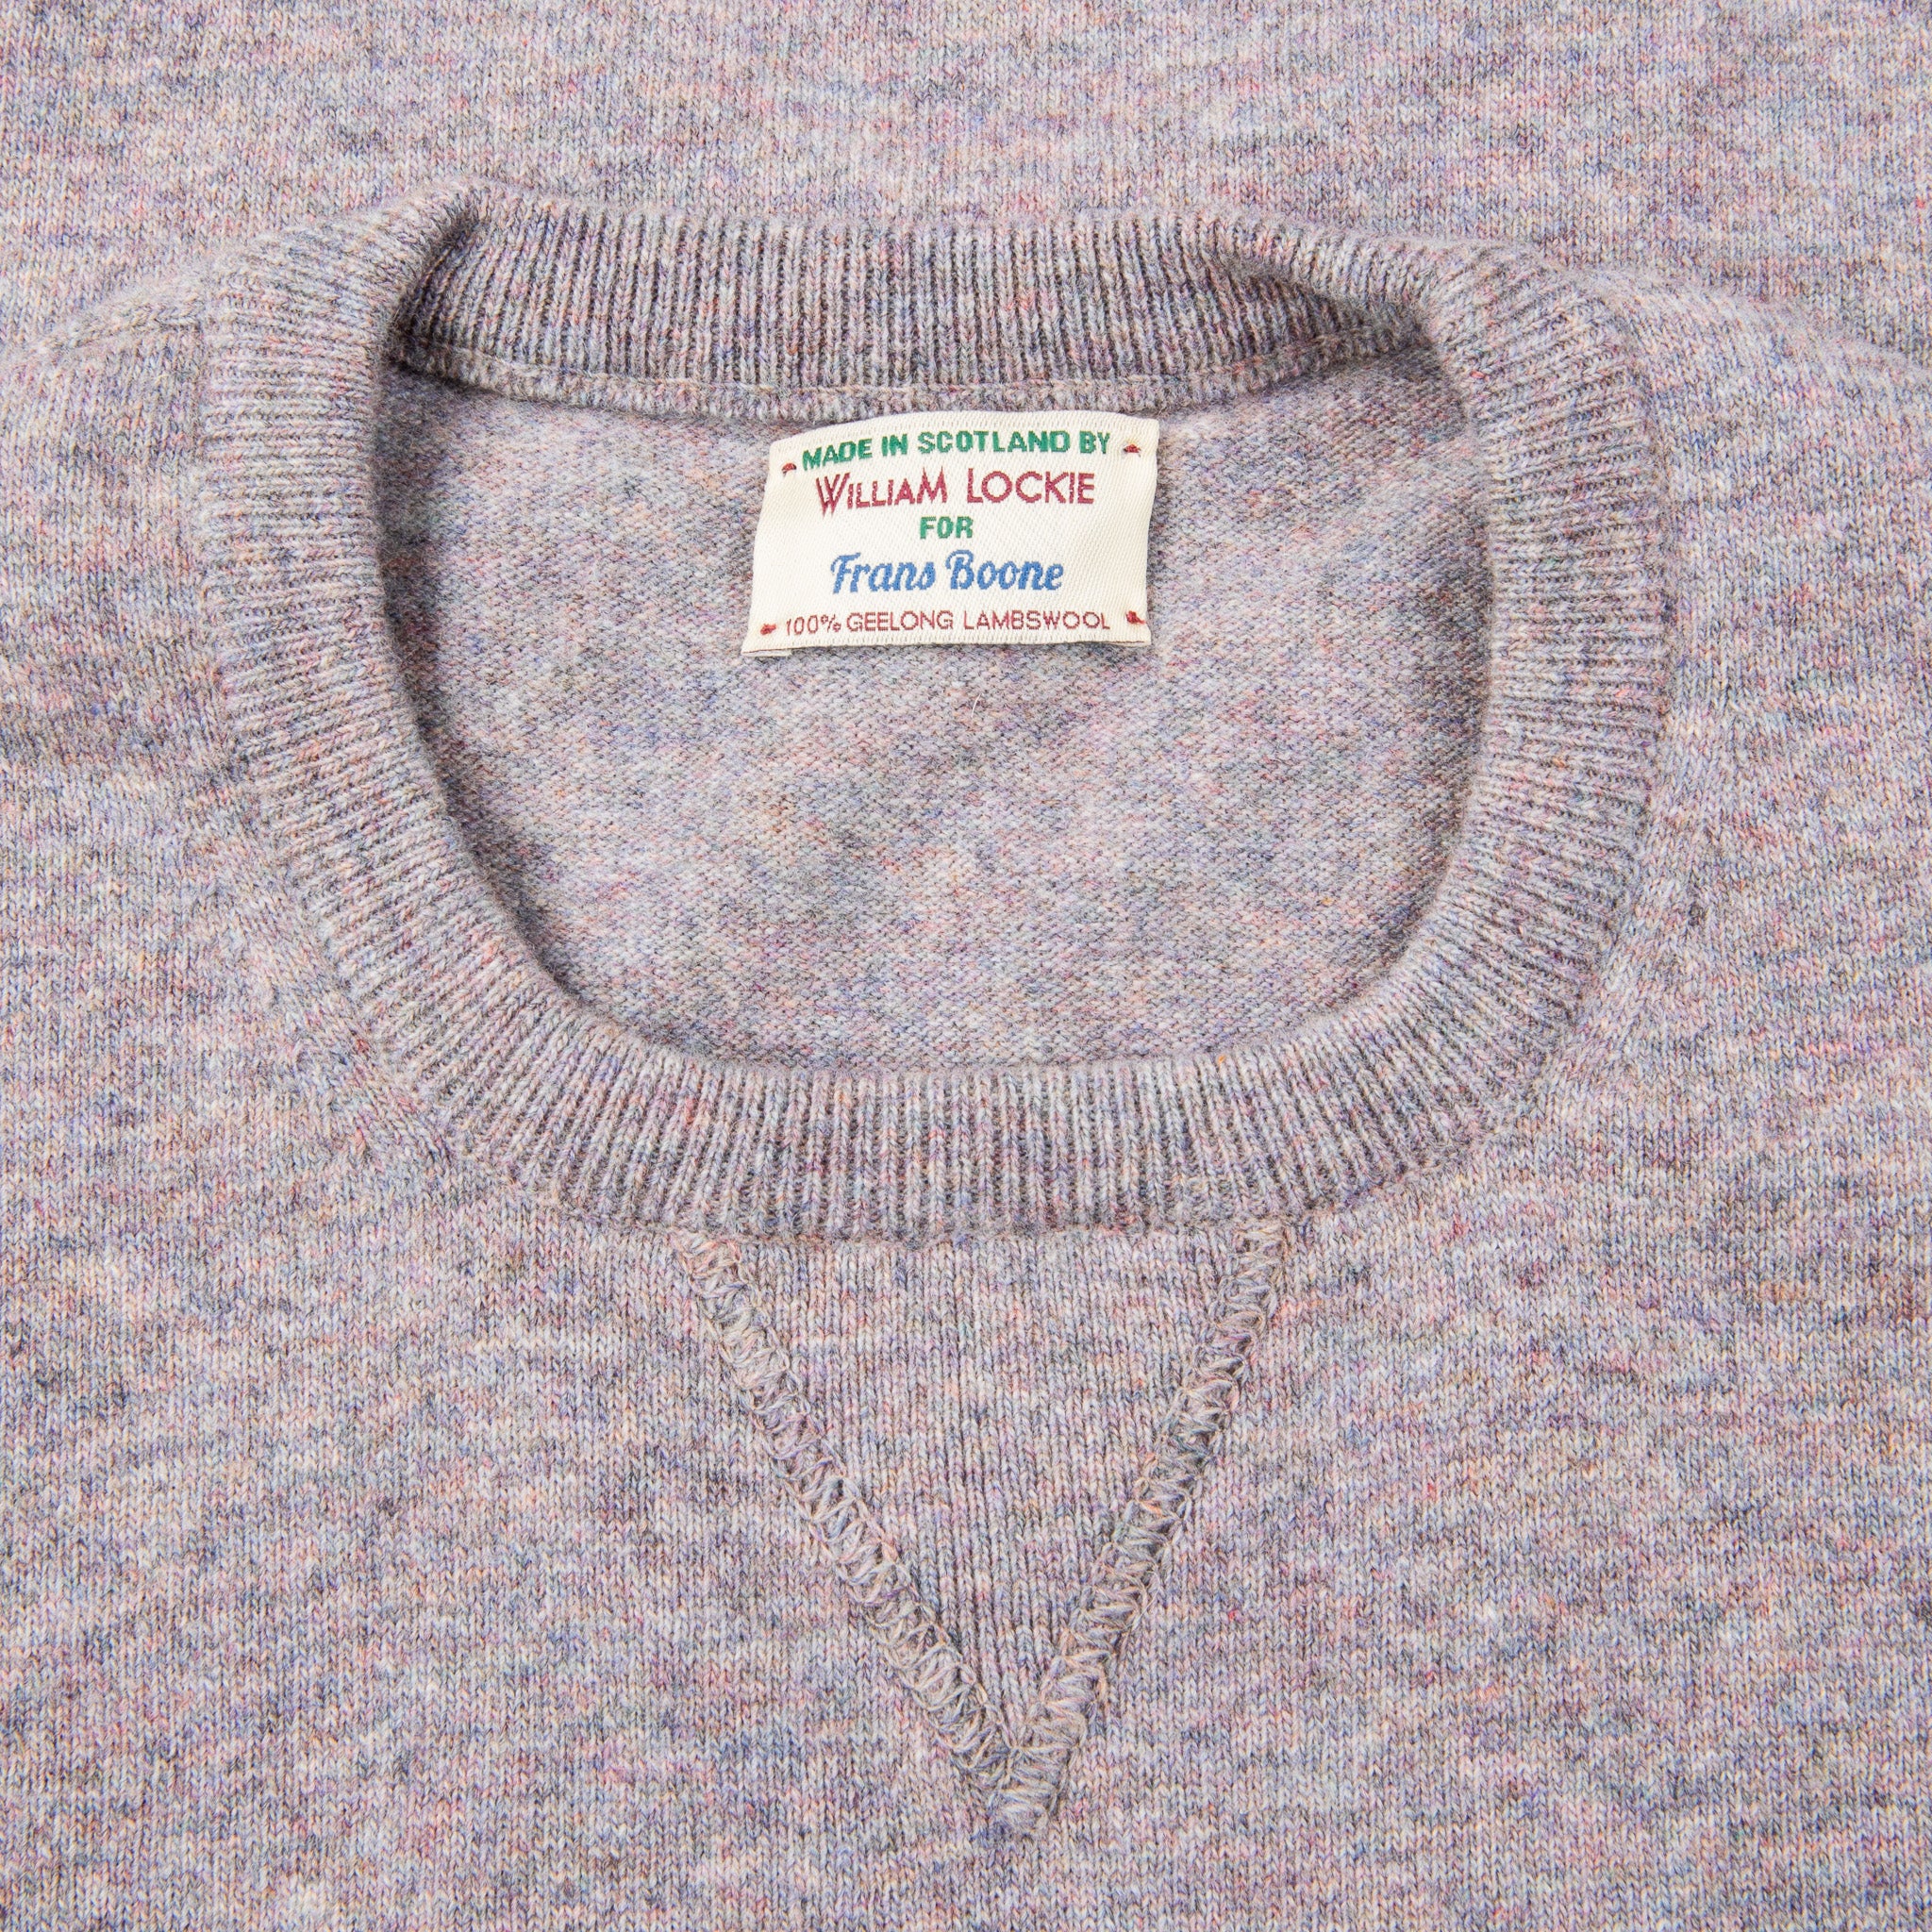 William Lockie x Frans Boone Super Geelong Vintage fit sweater marble ...